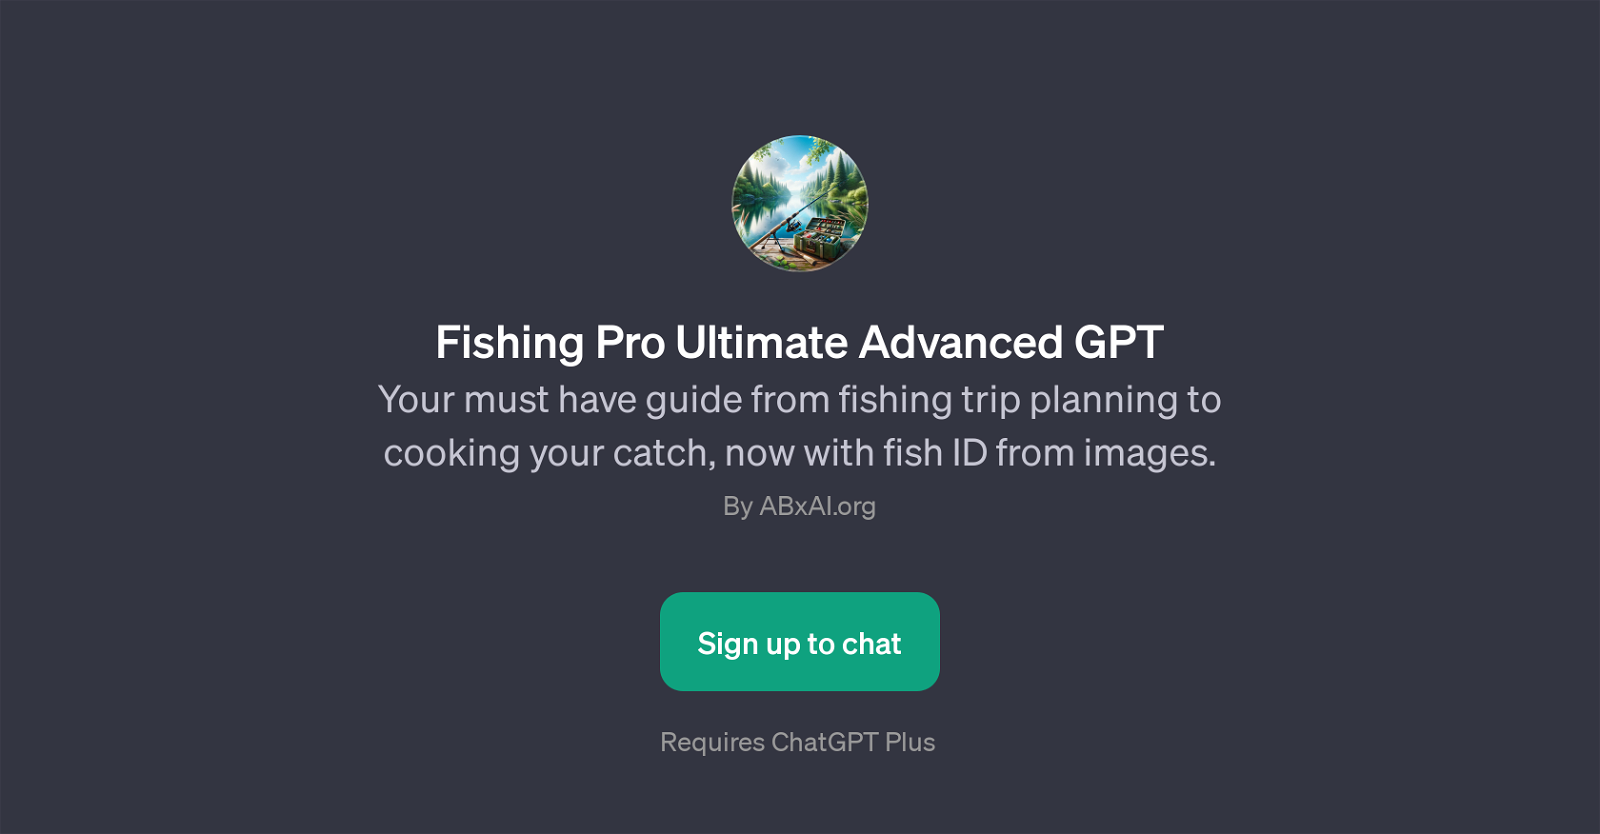 Fishing Pro Ultimate Advanced GPT website